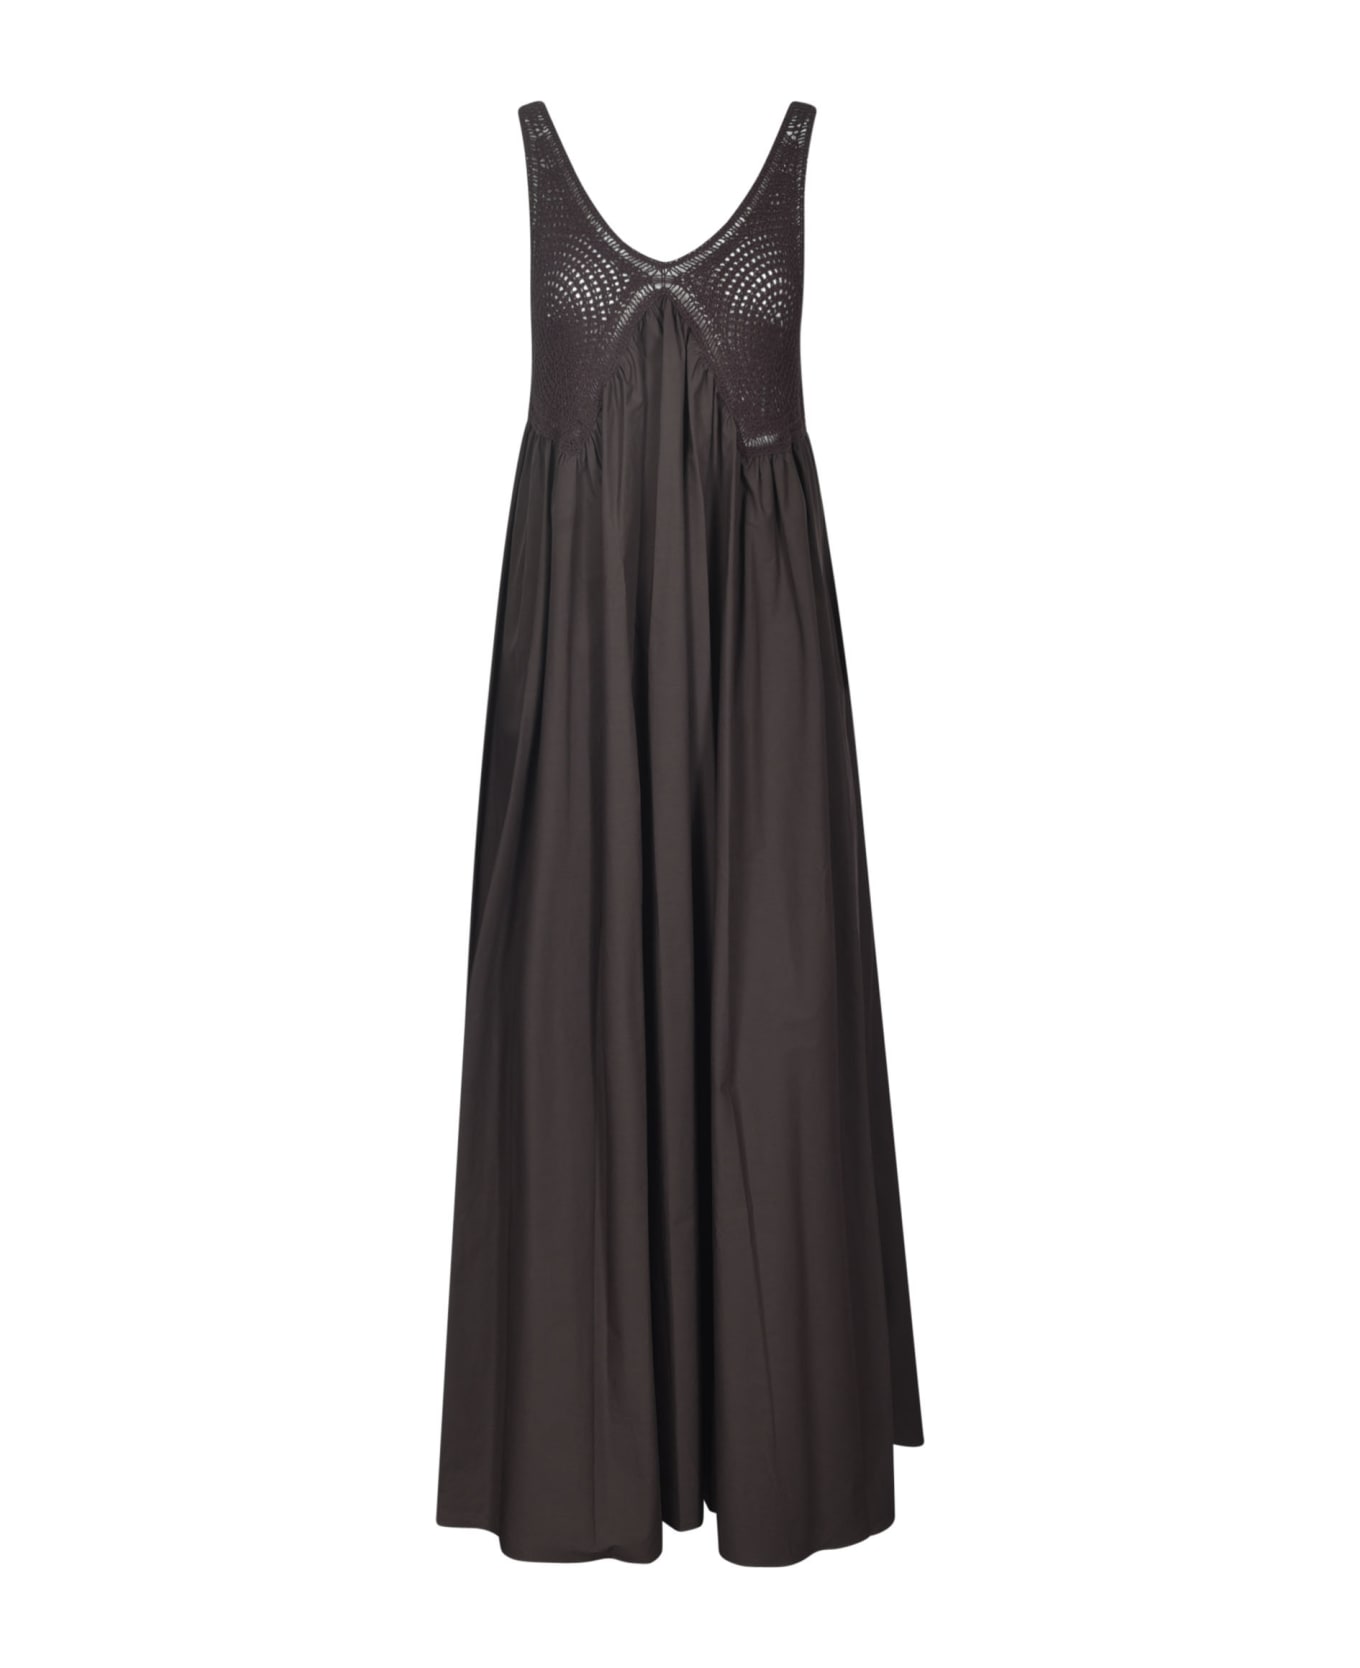 Parosh Crochet Sleeveless Dress - Brown